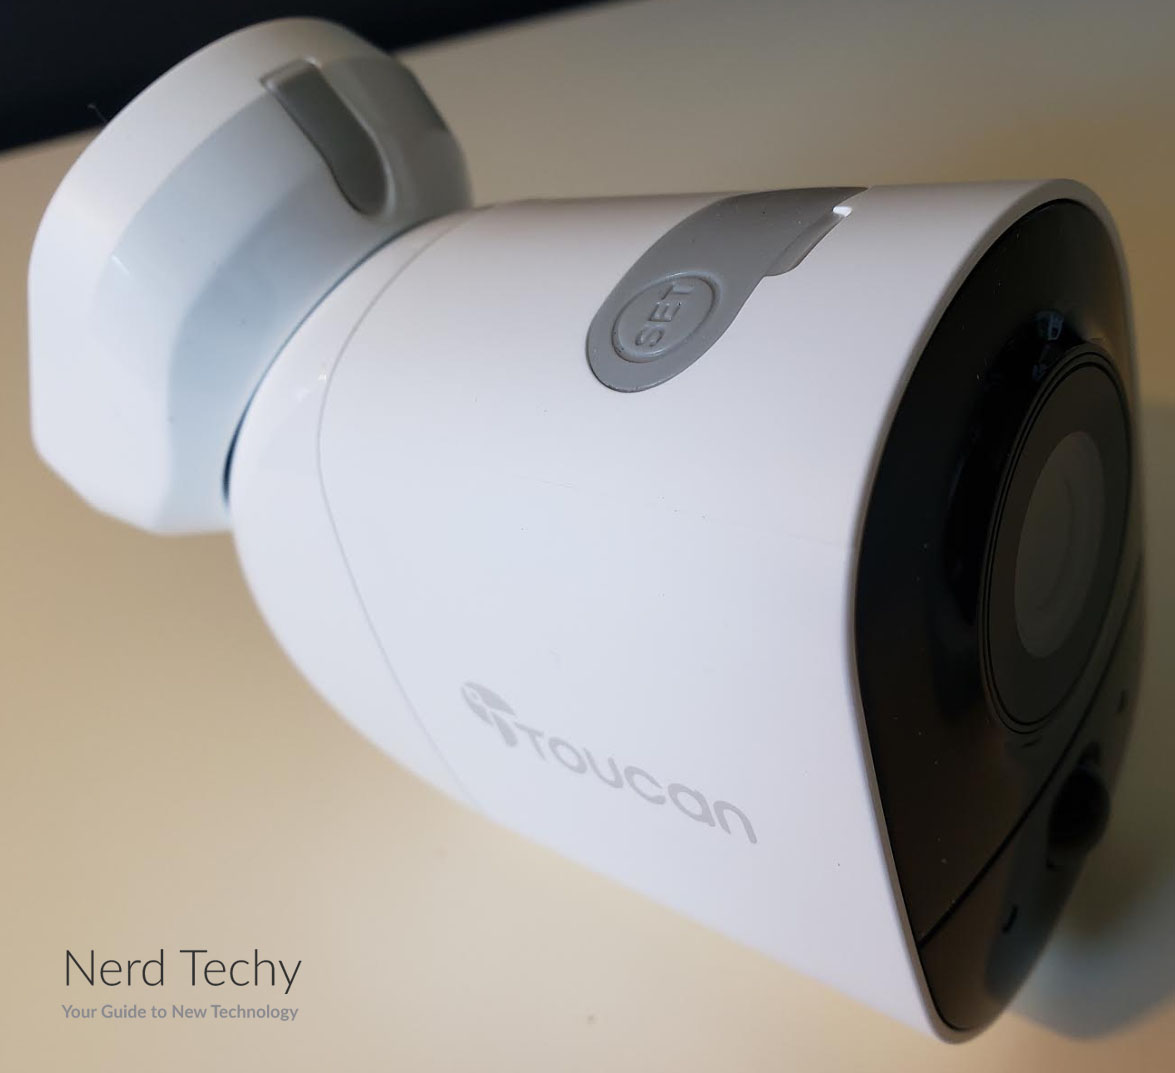 Toucan Wireless Outdoor Camera